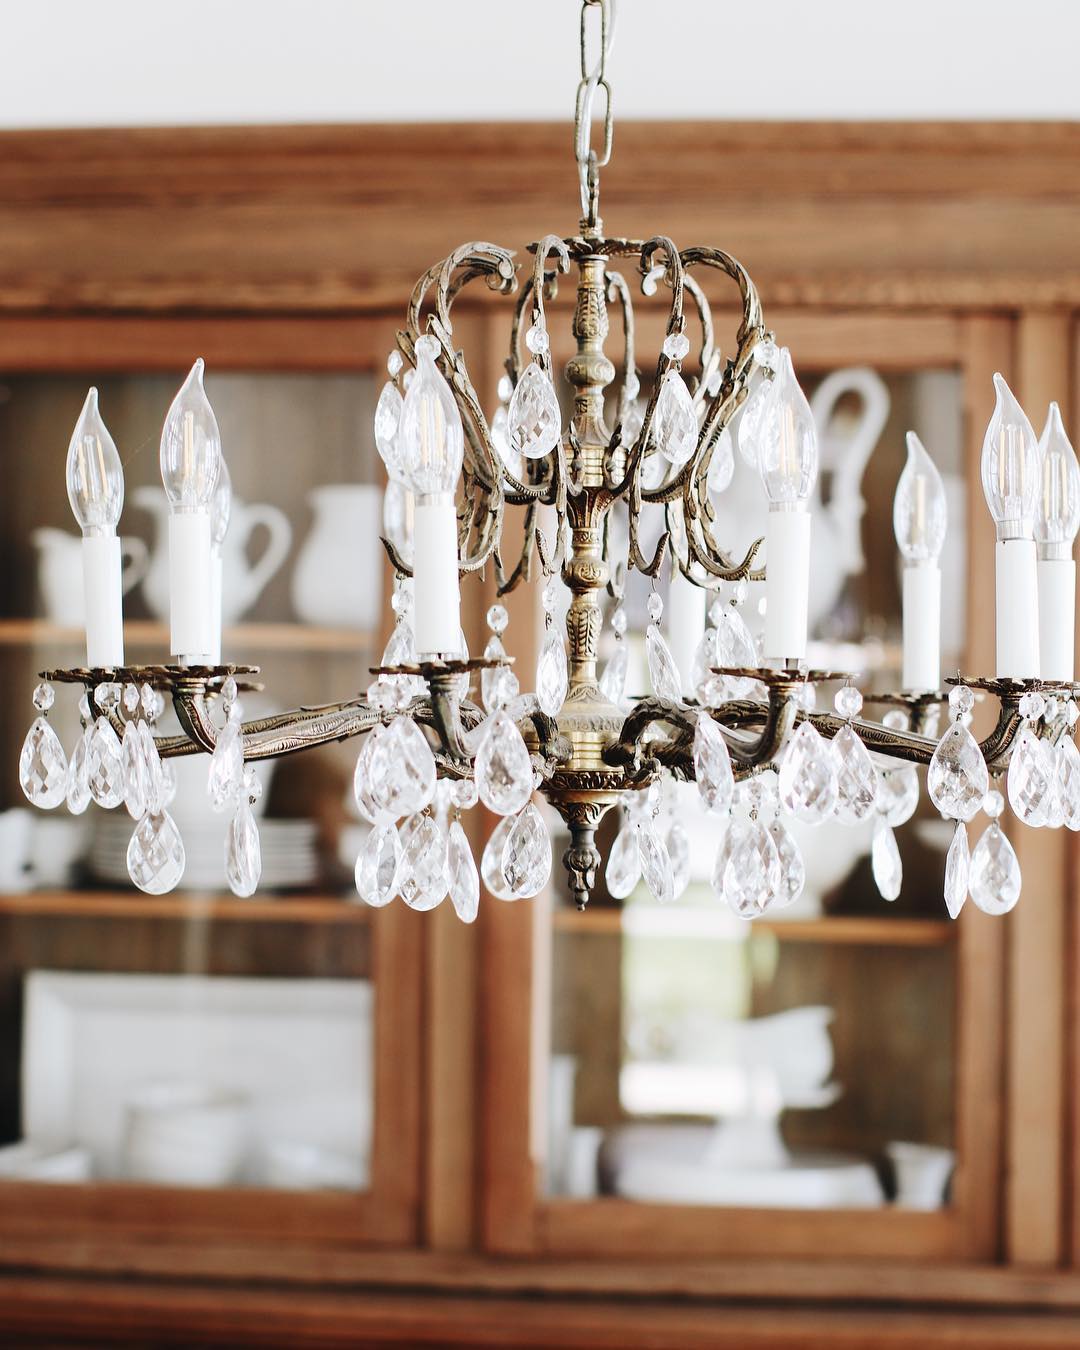 Vintage Dining room chandelier via @bloomingivylane_15